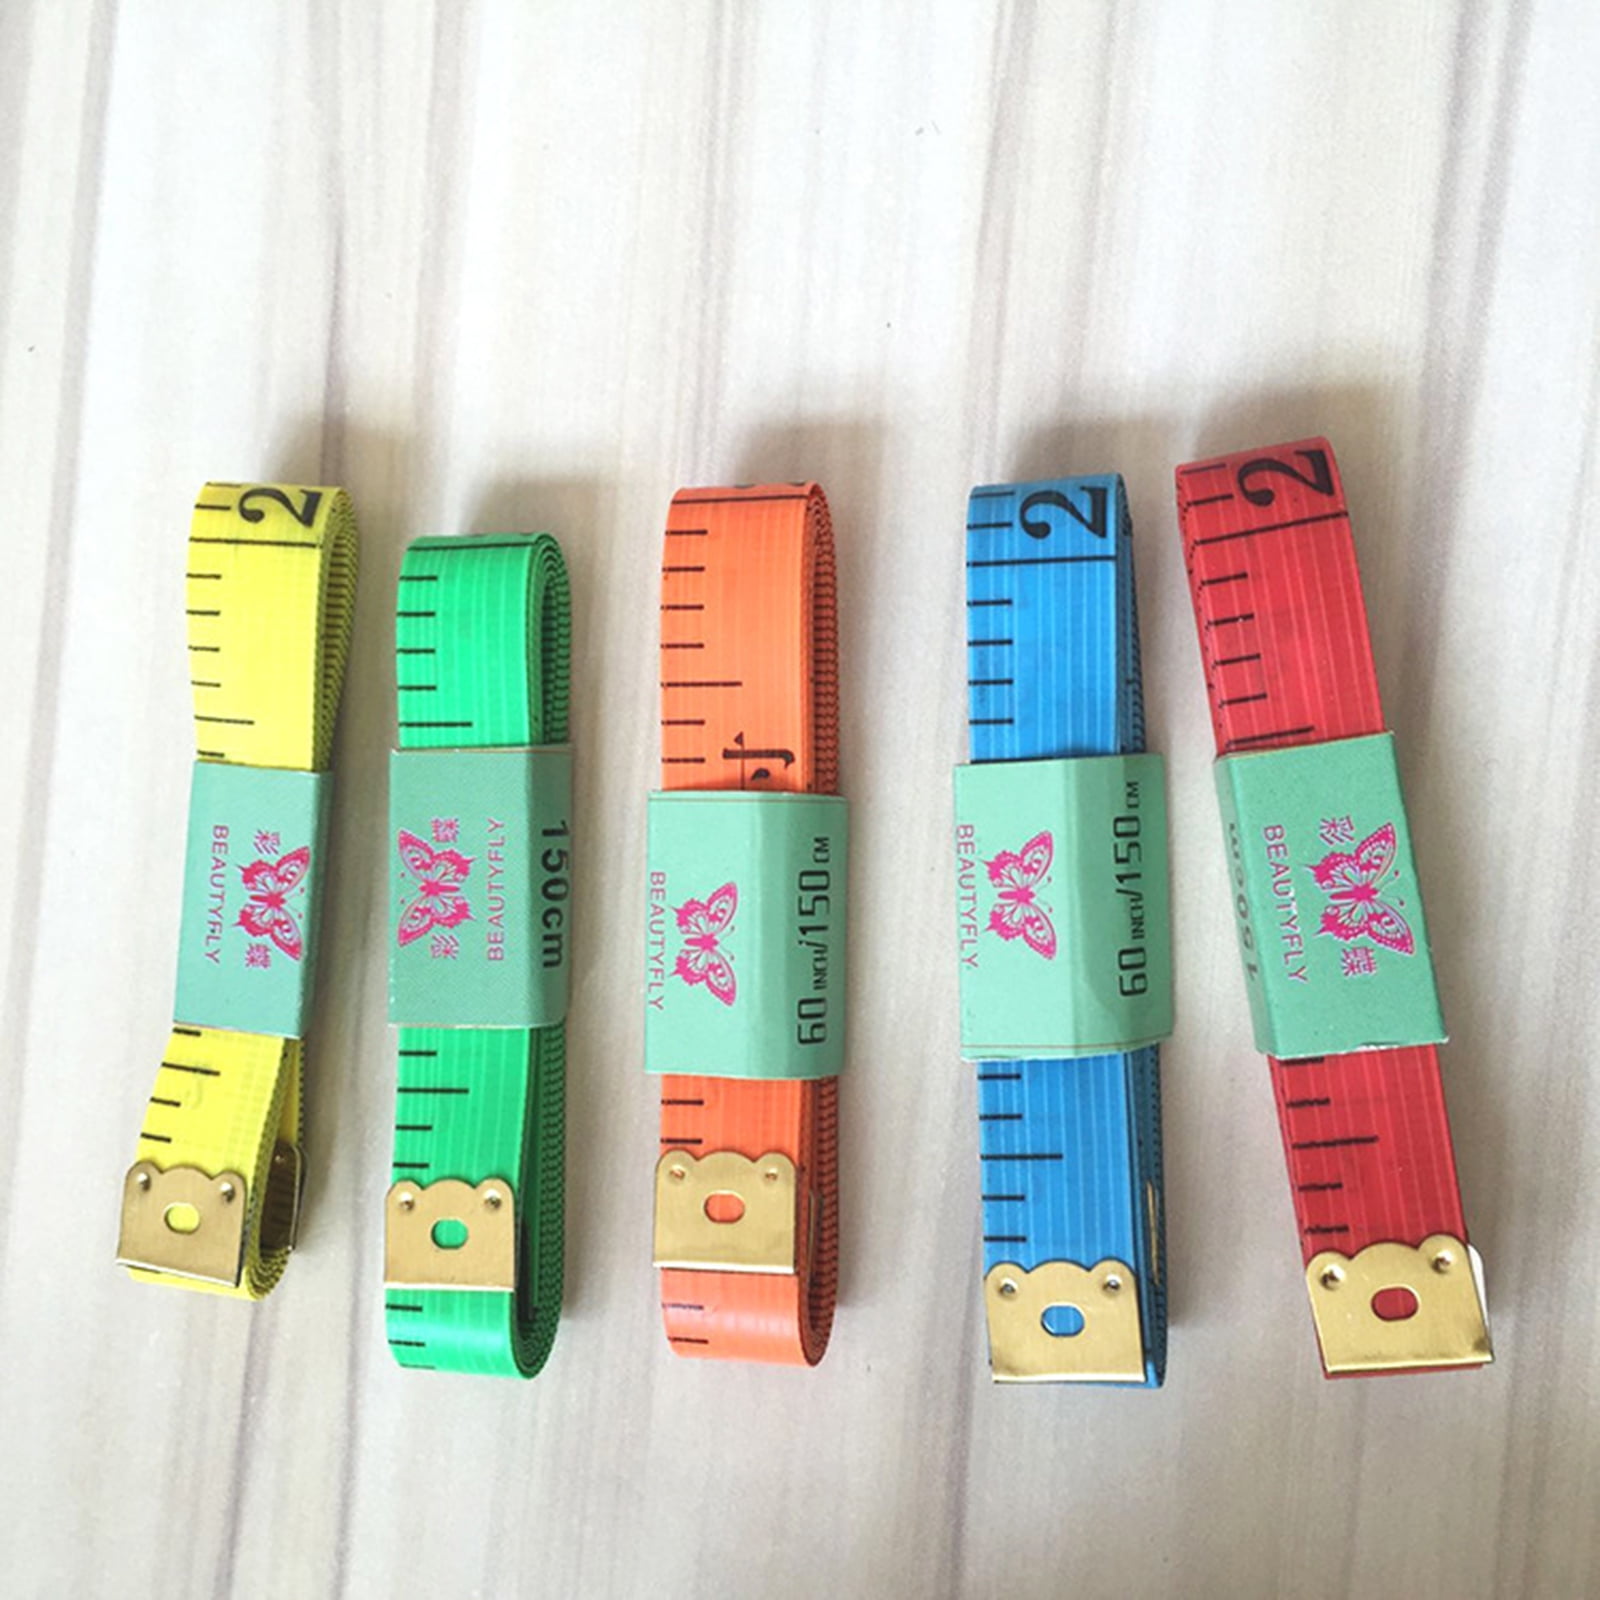 Newsfana Measuring Tape, Soft Tape Measure Double 6 Colour